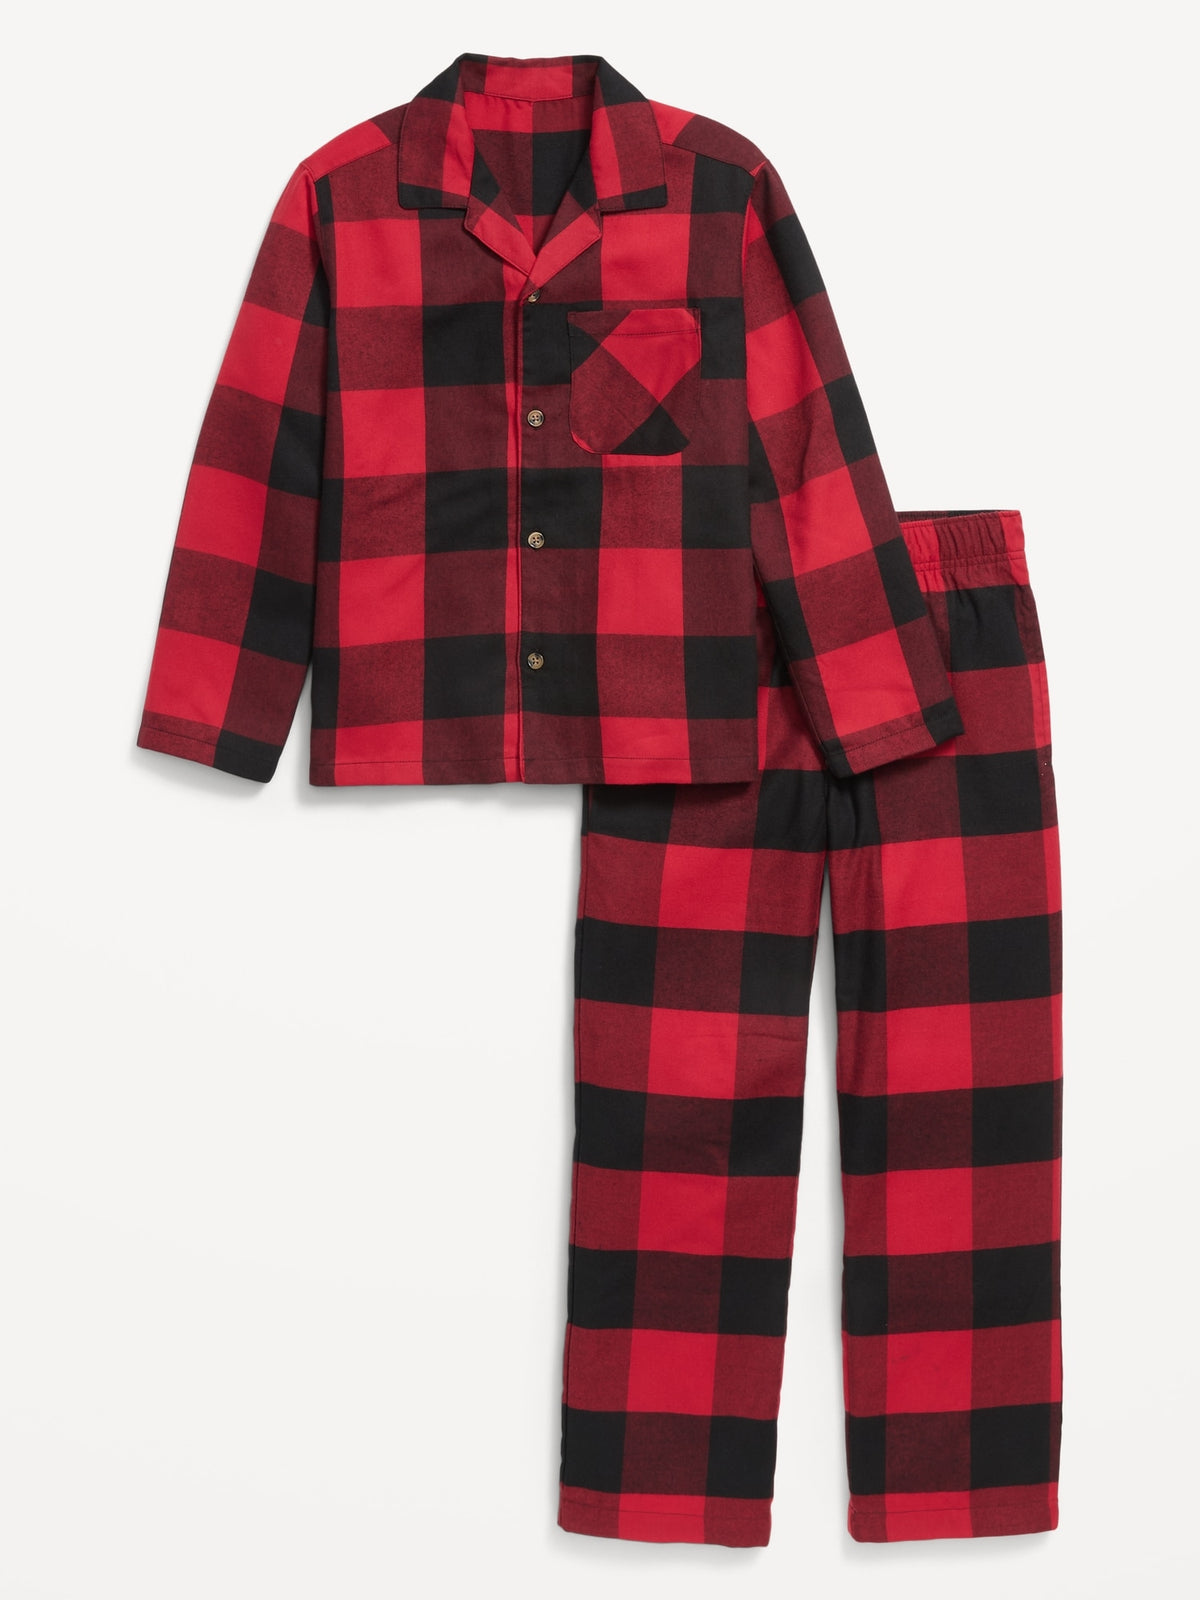 Gender-Neutral Matching Flannel Pajama Set for Kids - Old Navy